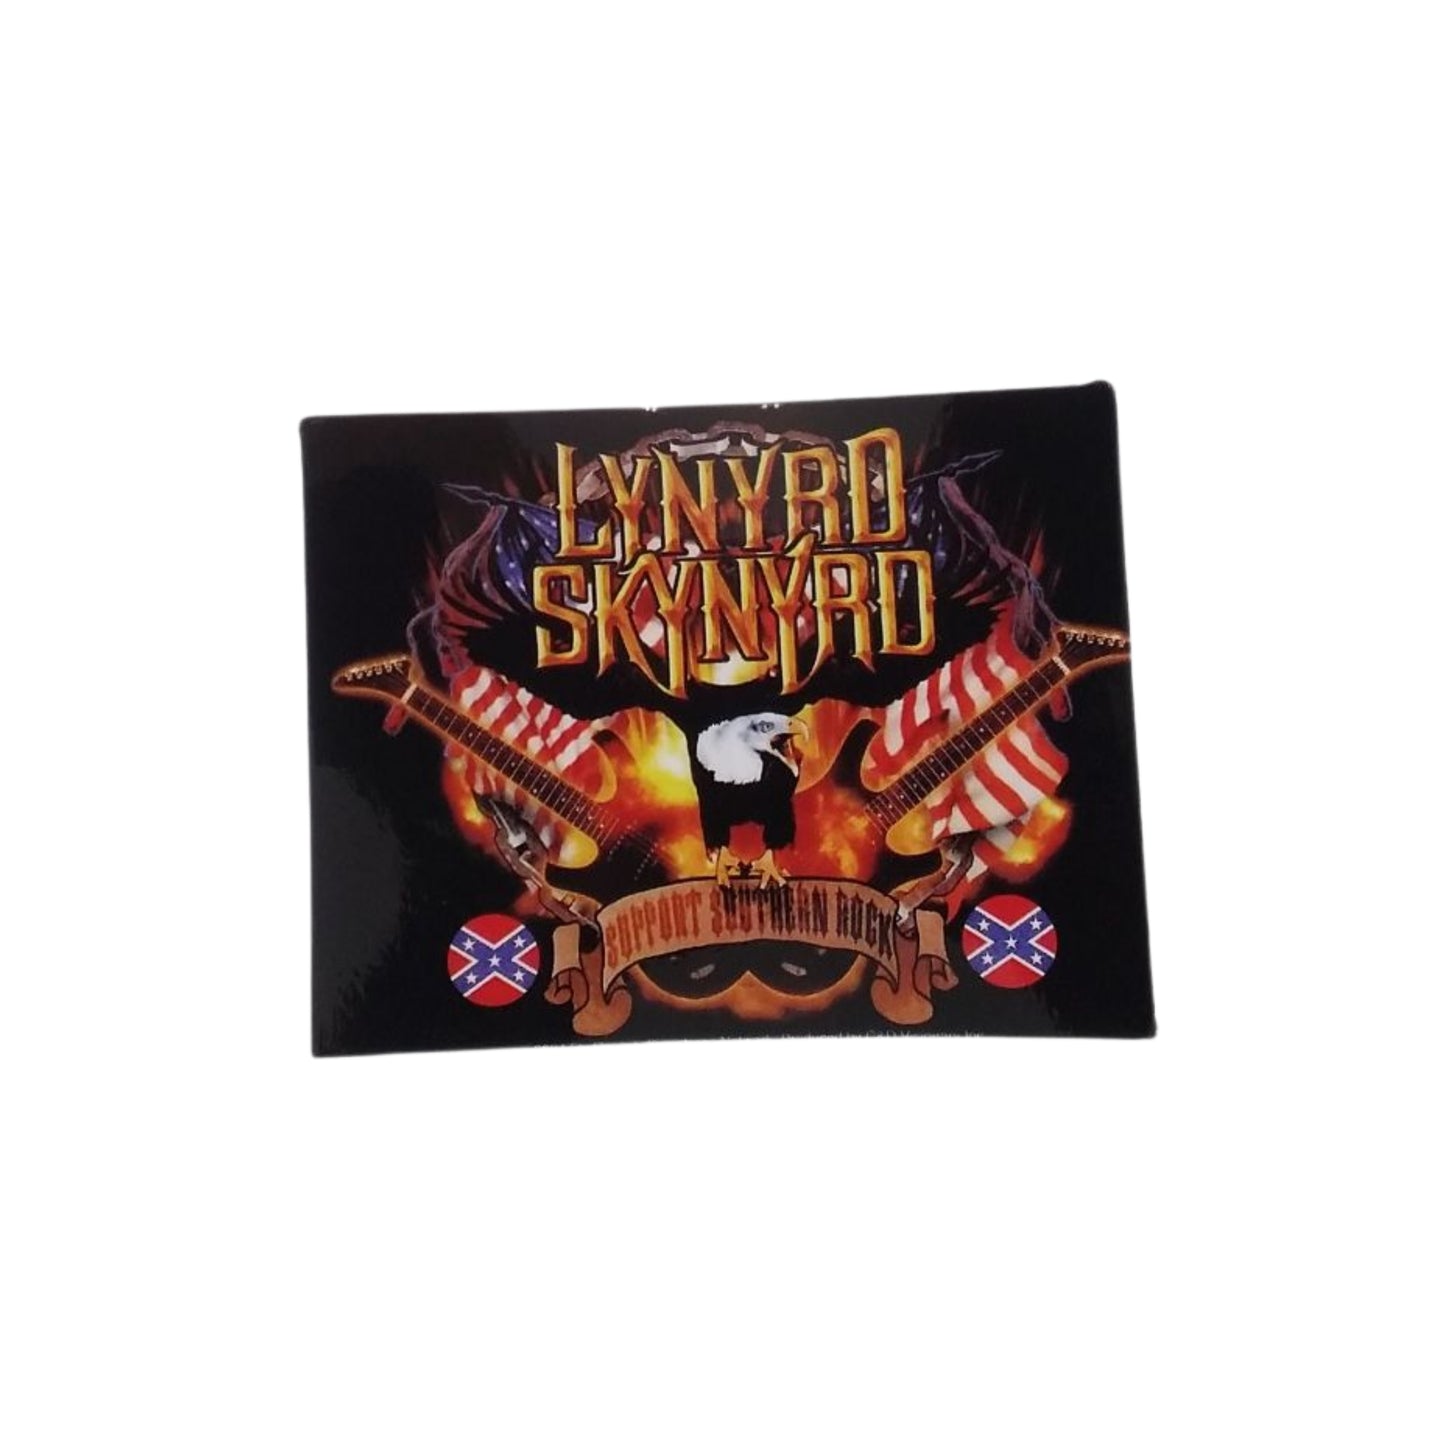 Lynyrd Skynyrd Support Southern Rock - Sticker